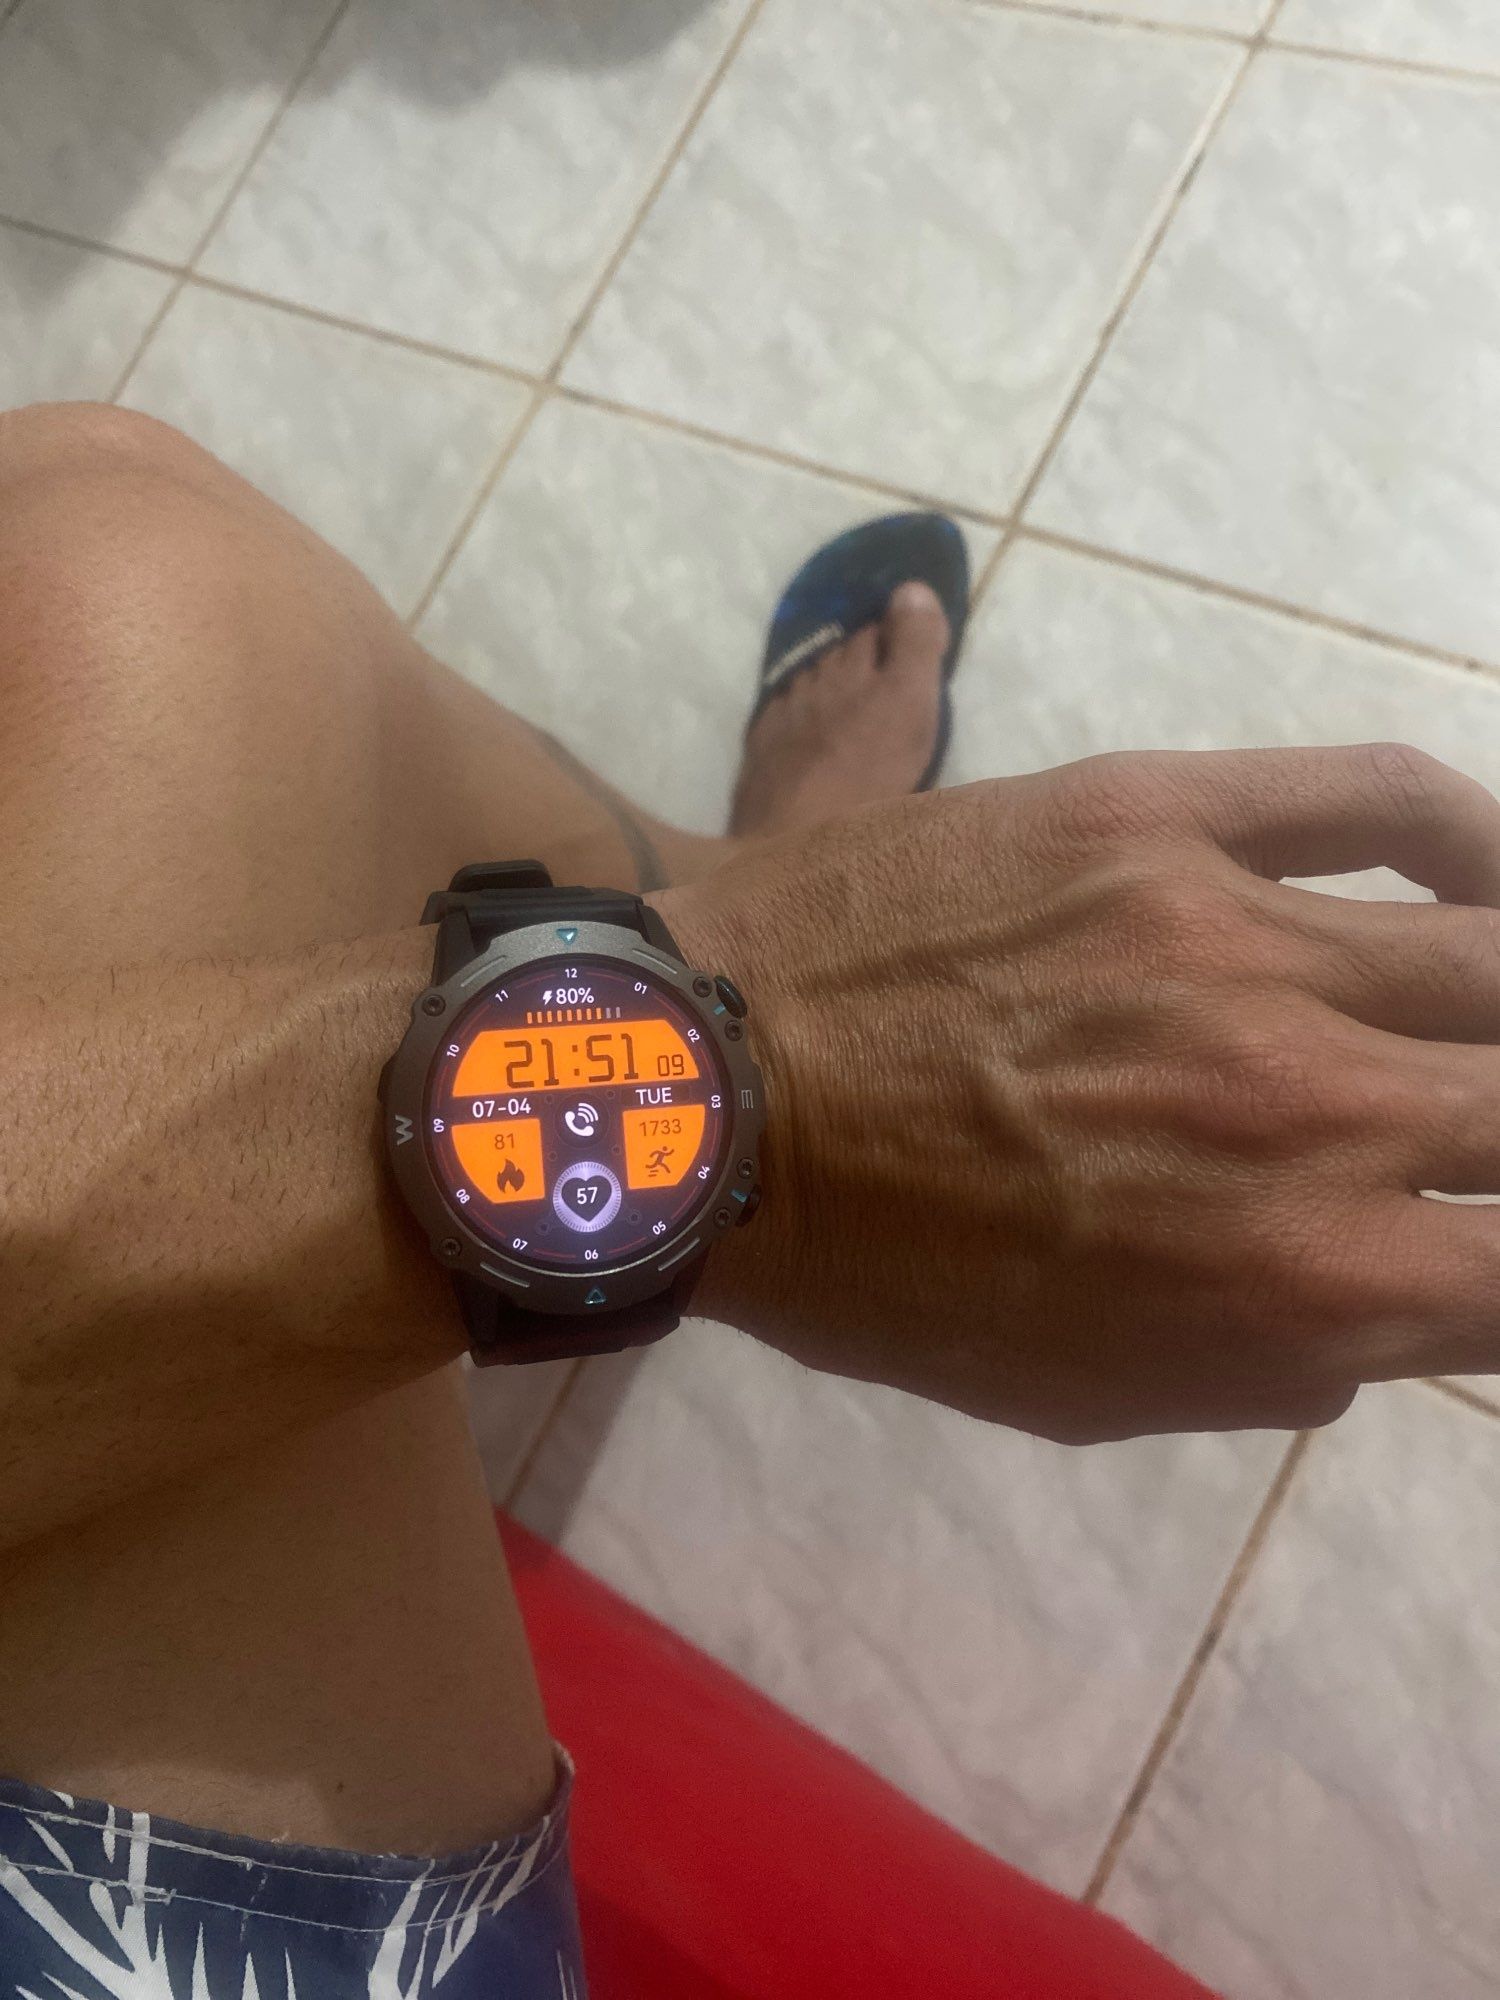 Colmi M42 AMOLED екран smart watch смарт годинник часы звонки AOD